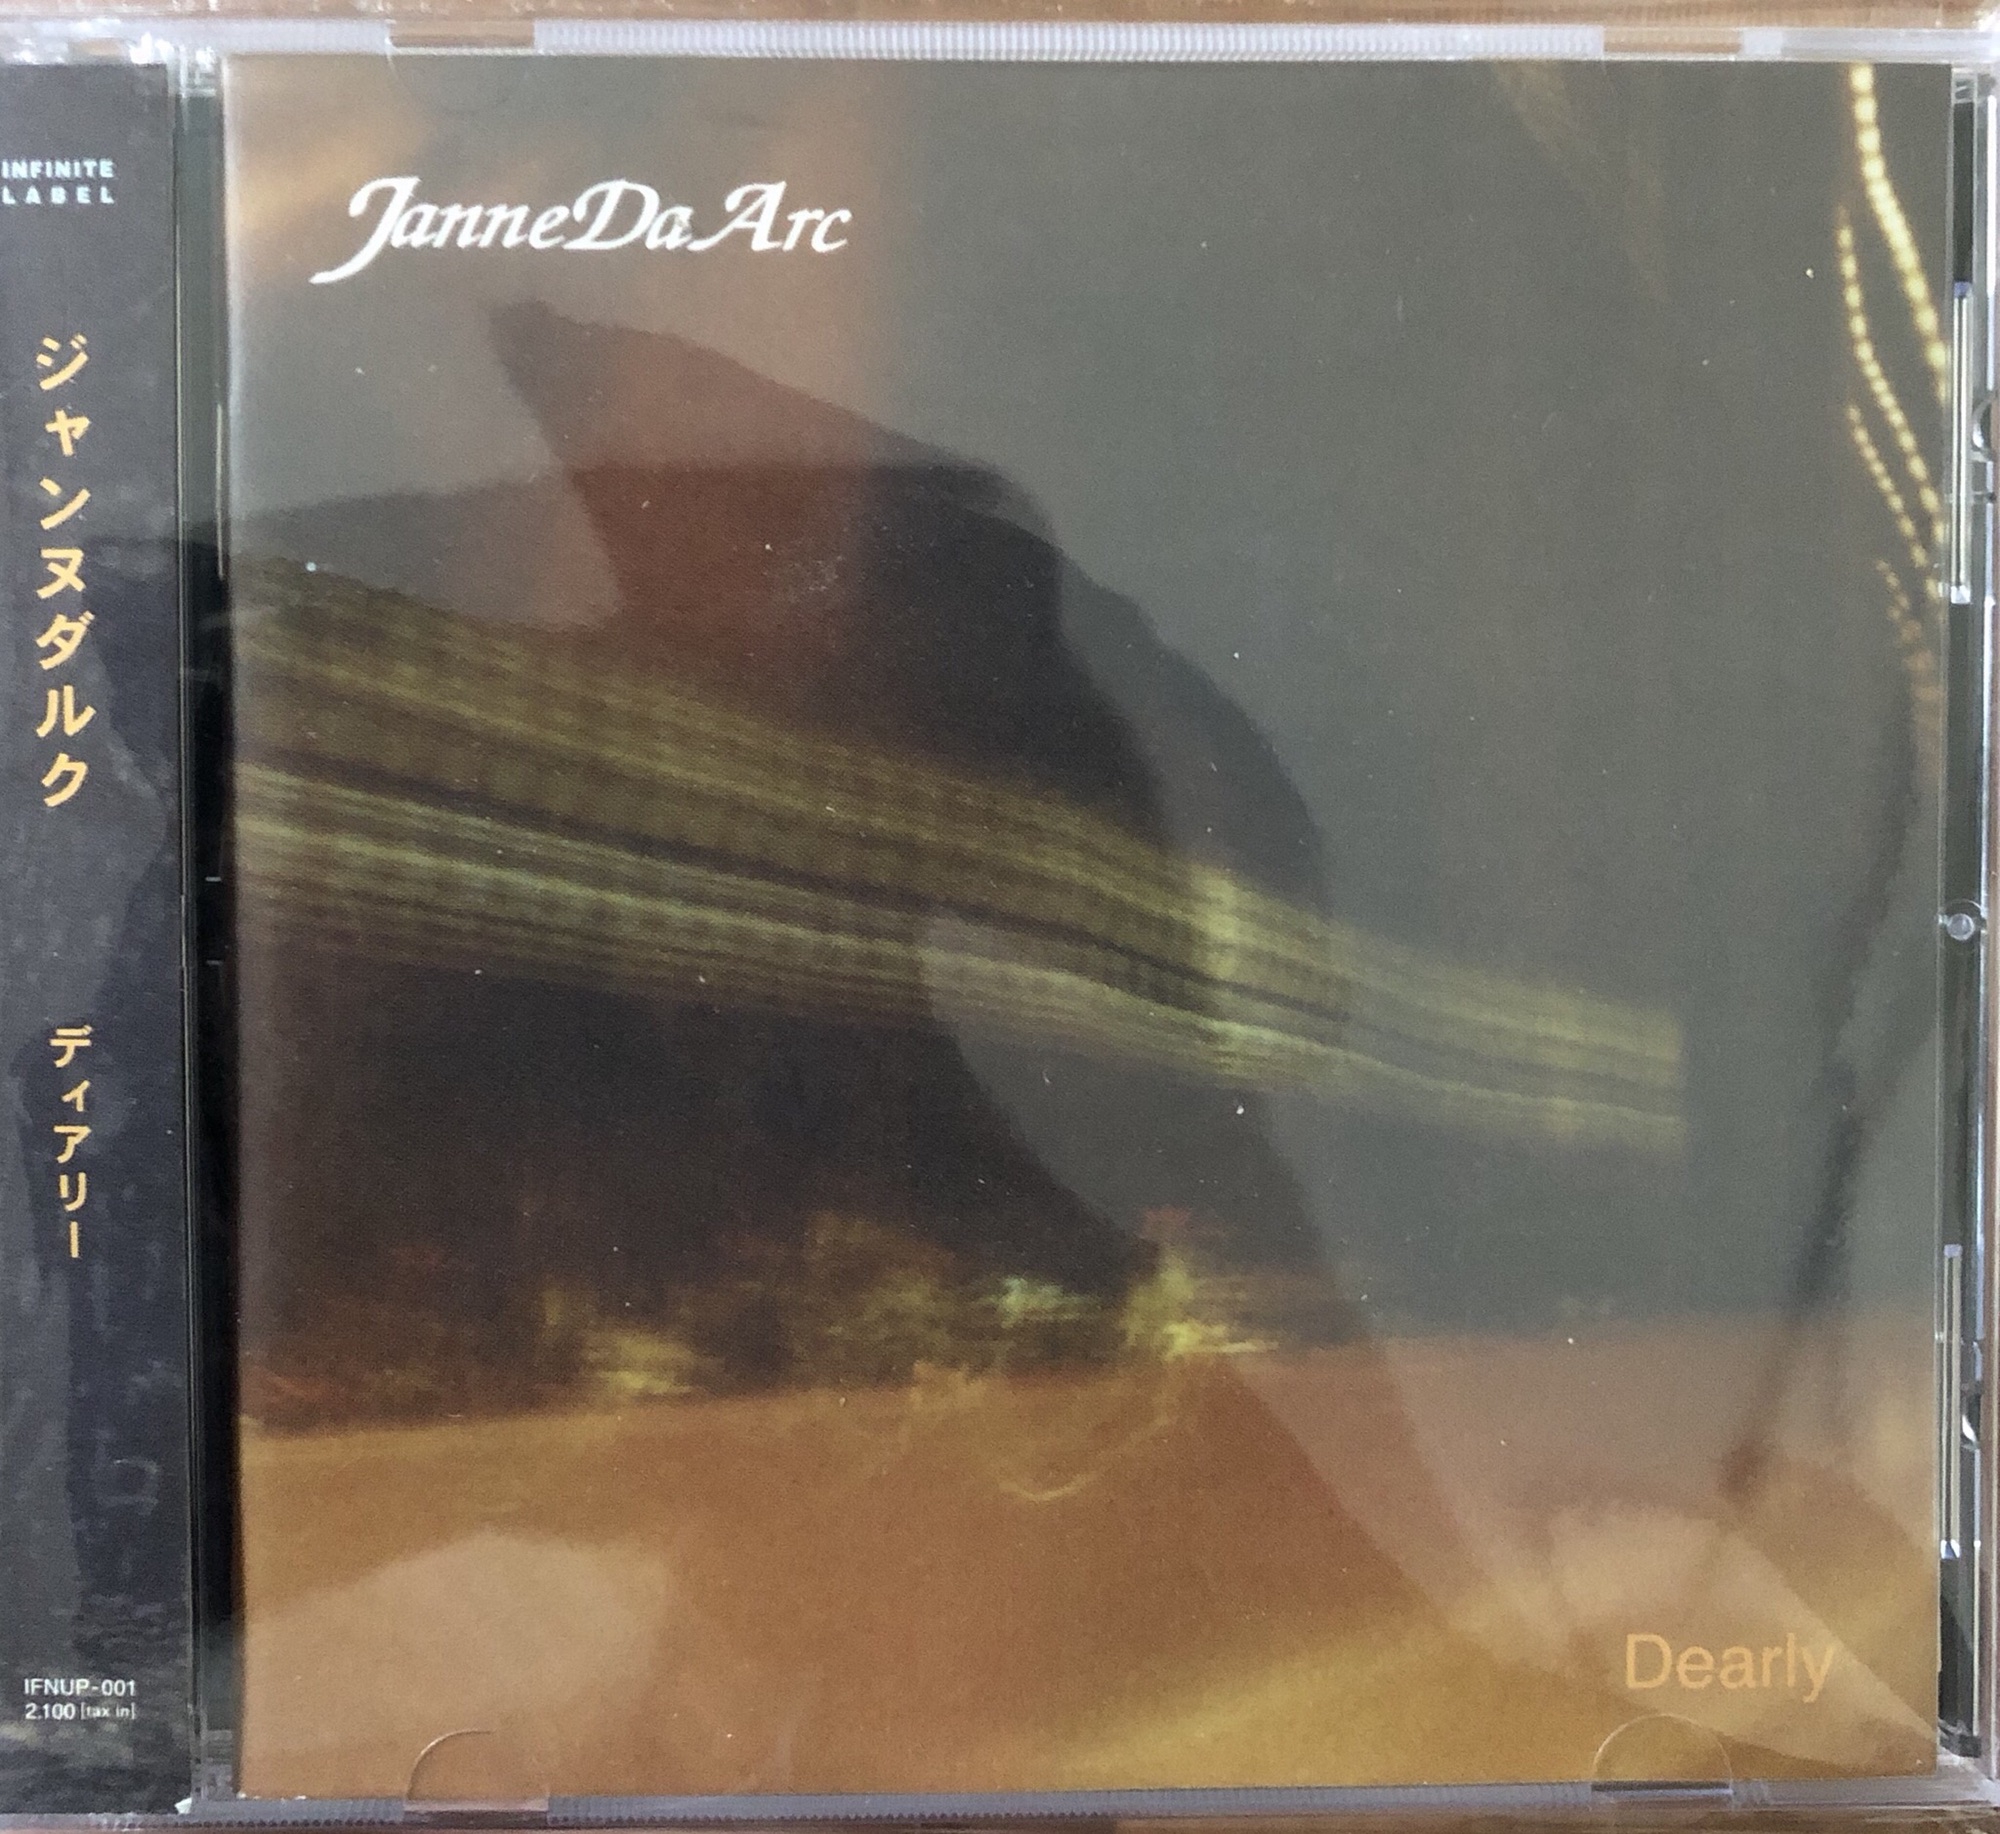 Indies 1st mini album 〝Dearly〟 | Janne Da Arc discography 